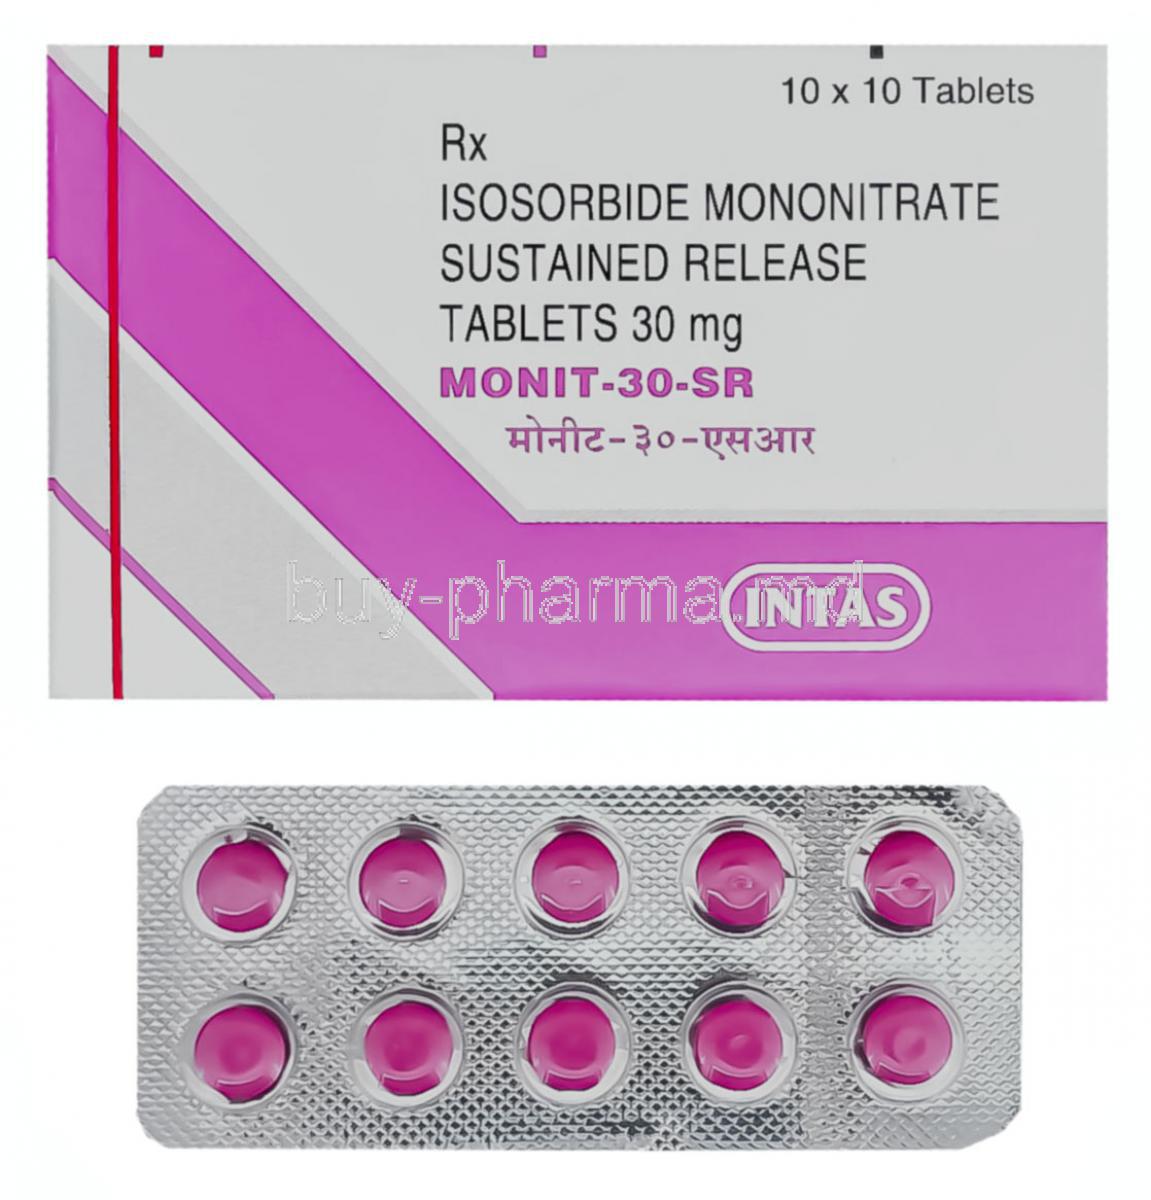 Generic Imdur, Monit, Isosorbide Mononitrate 30 mg SR Tablet (Intas) box and tablet